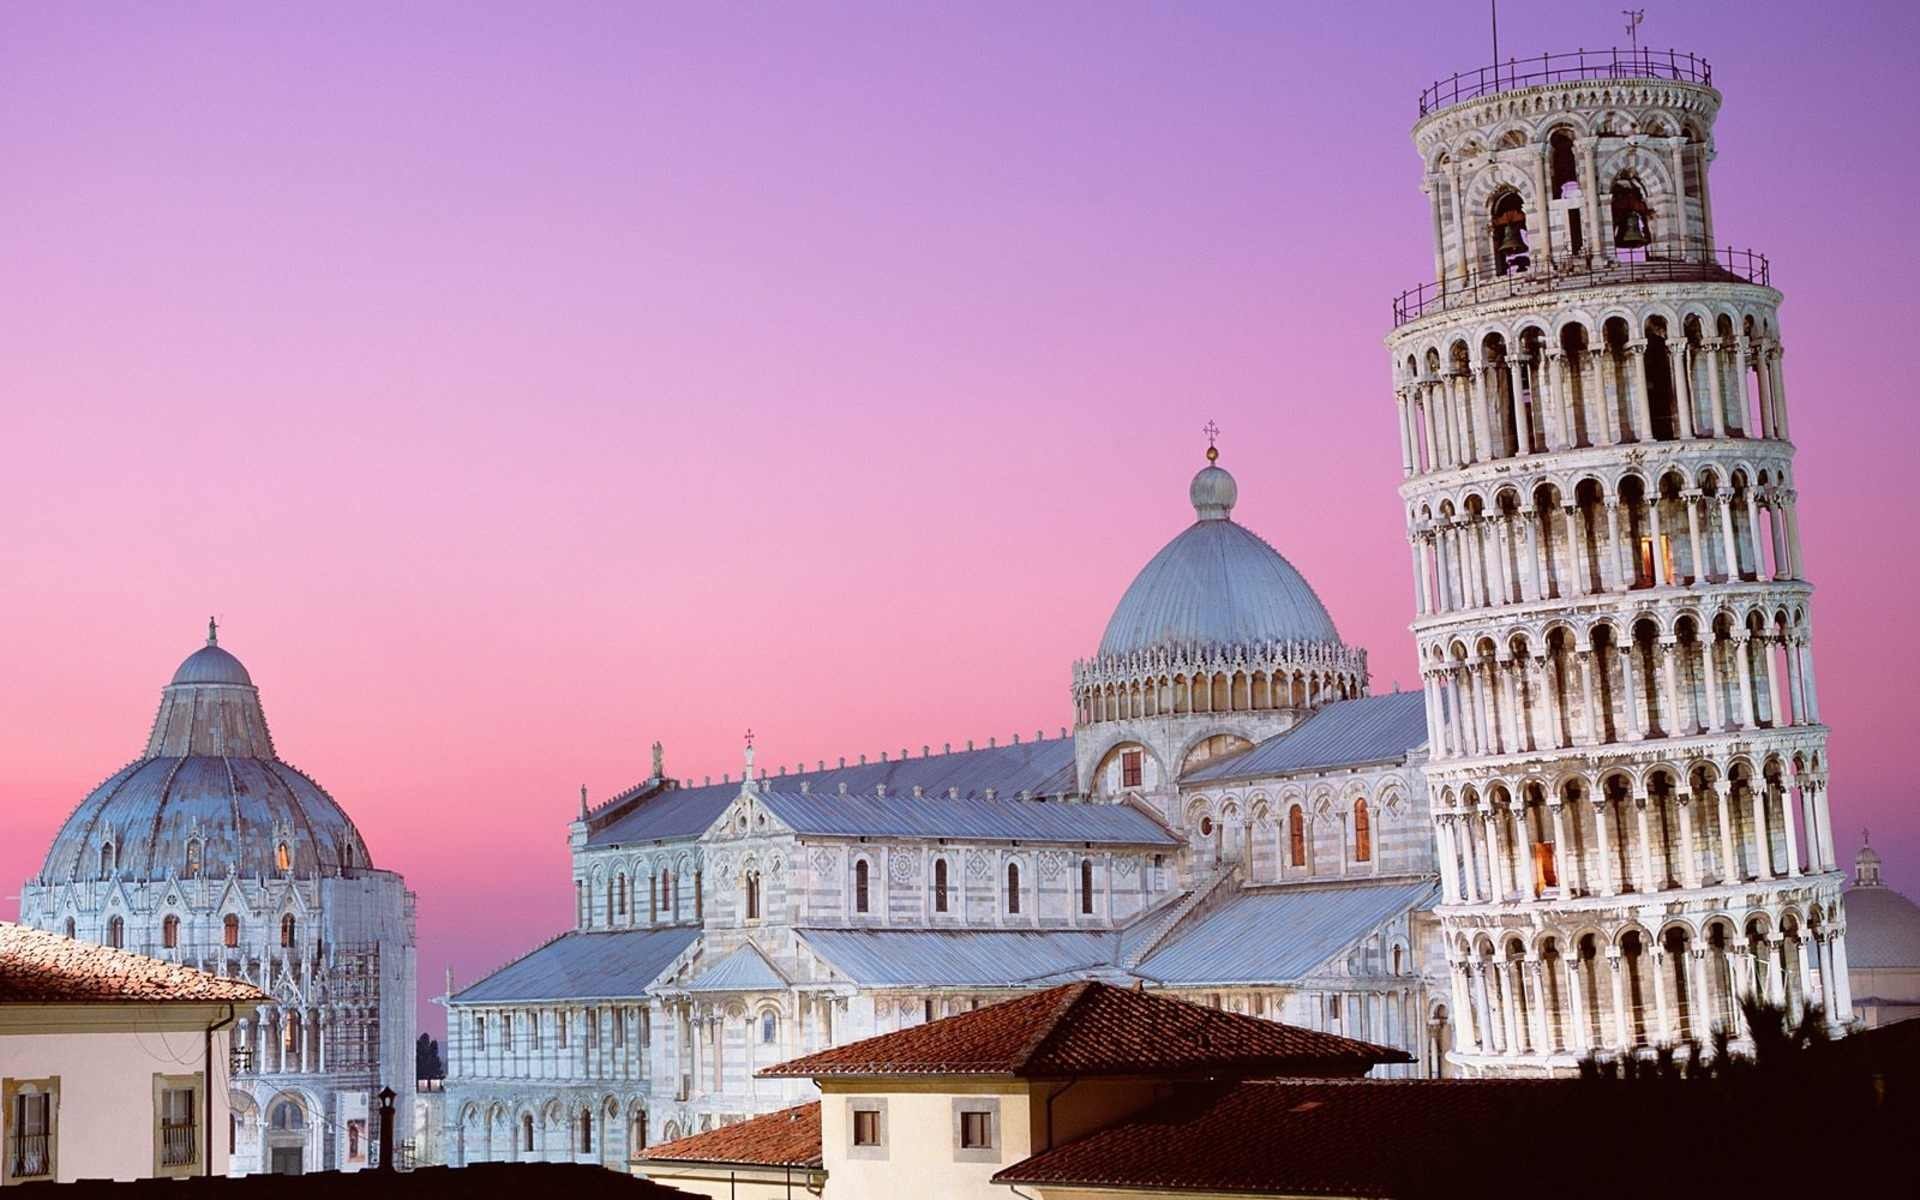 Leaning Tower Of Pisa Art